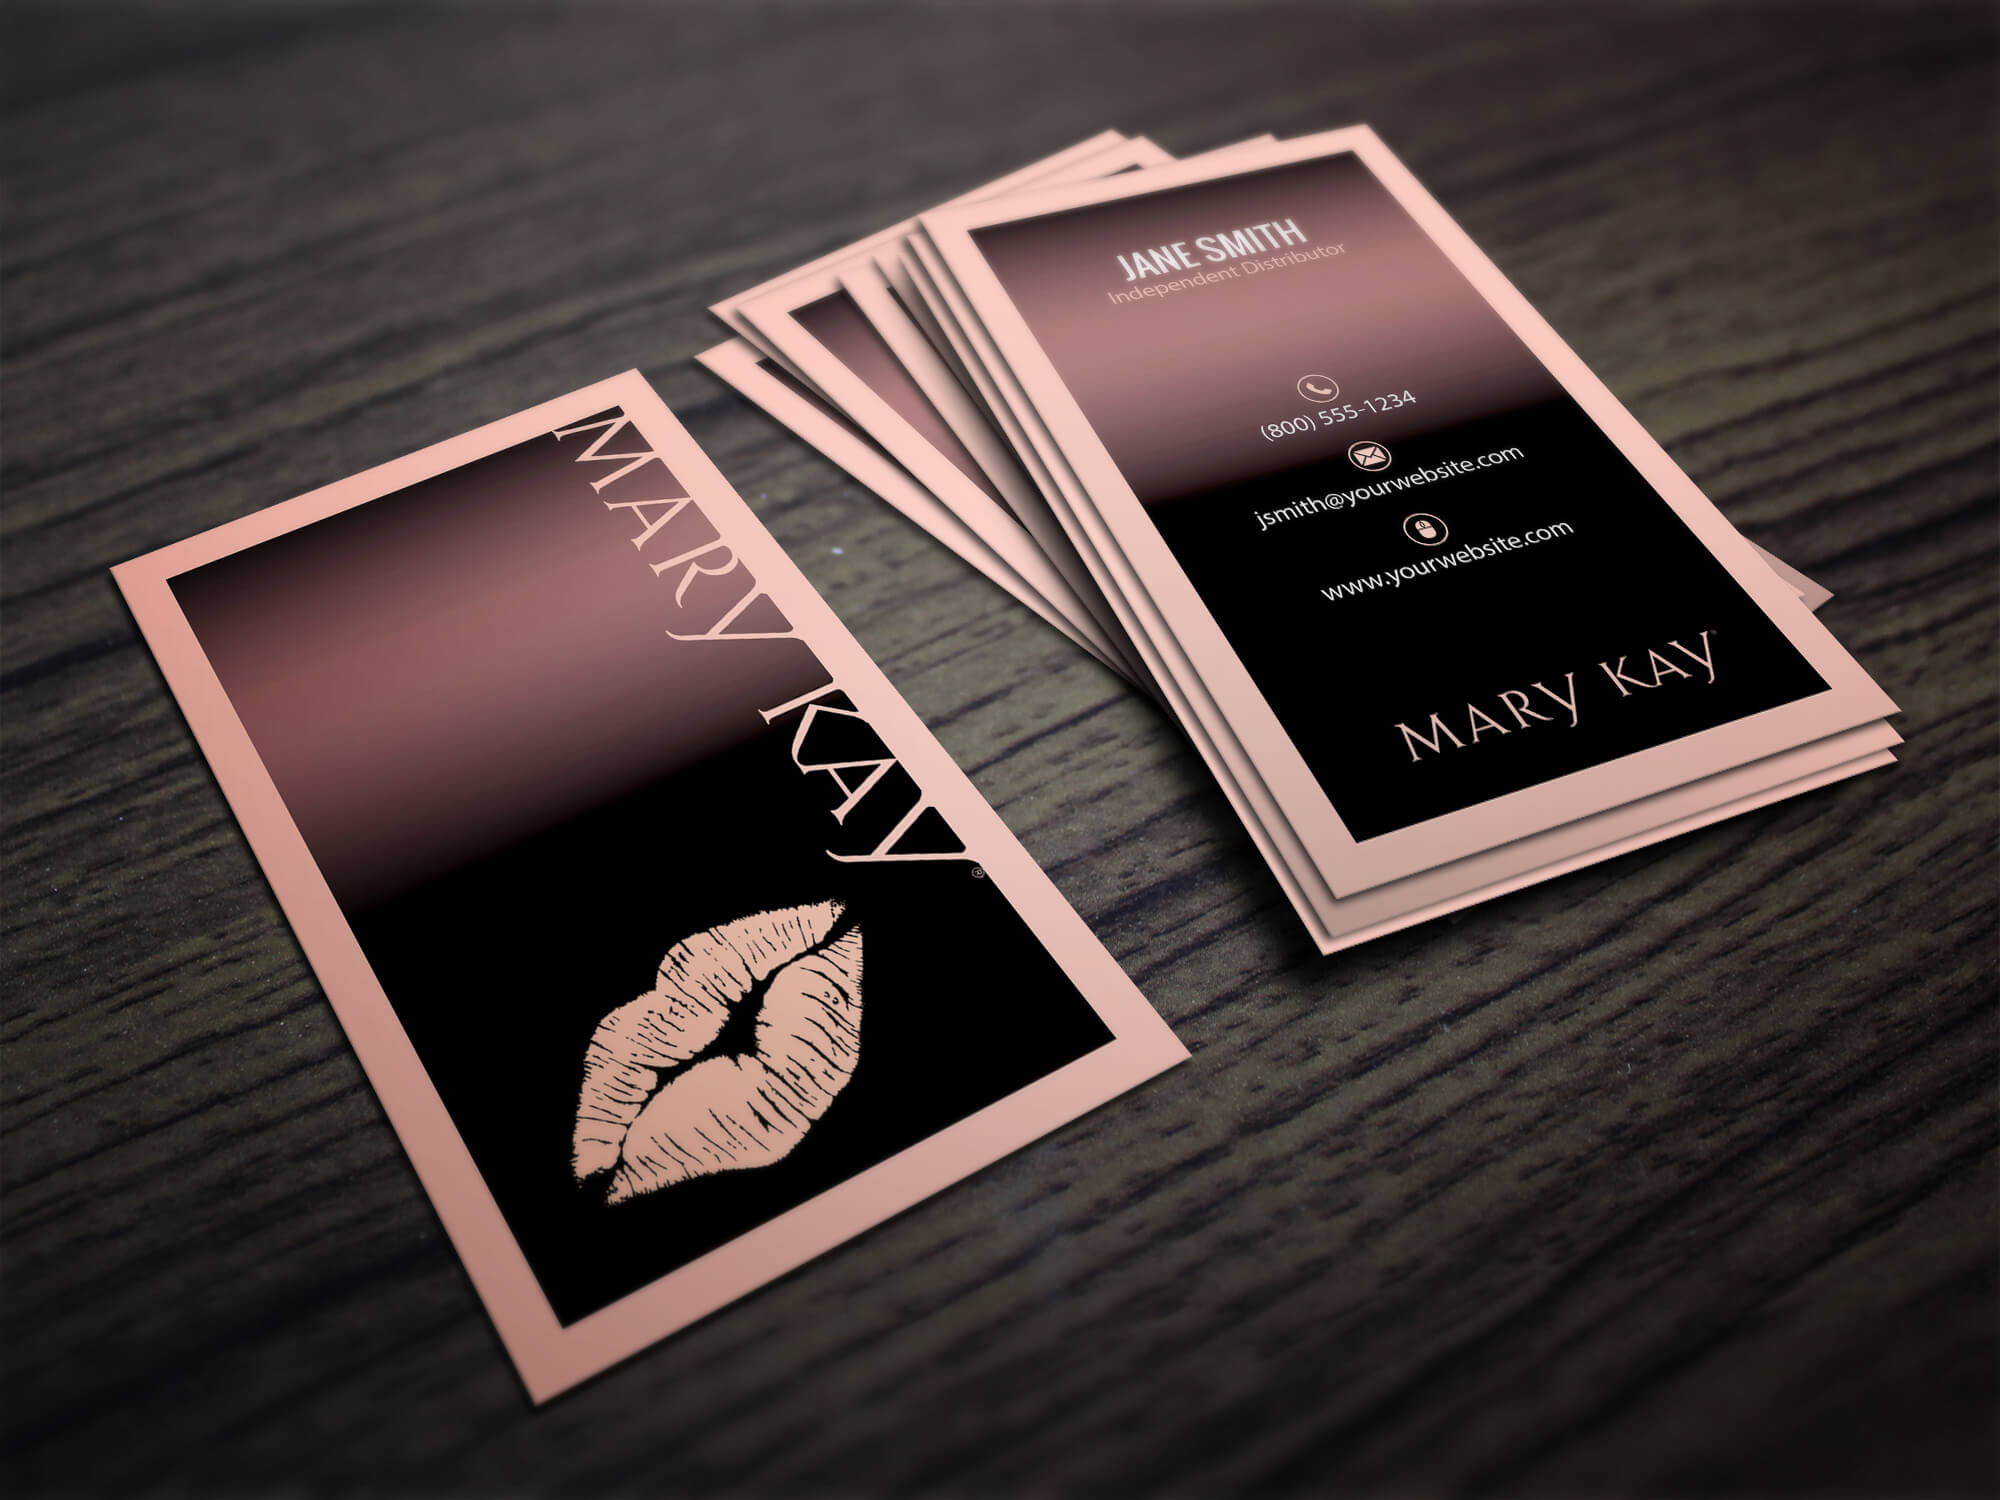 Mary Kay Business Cards | Mary Kay Negocio In 2019 | Mary Regarding Mary Kay Business Cards Templates Free